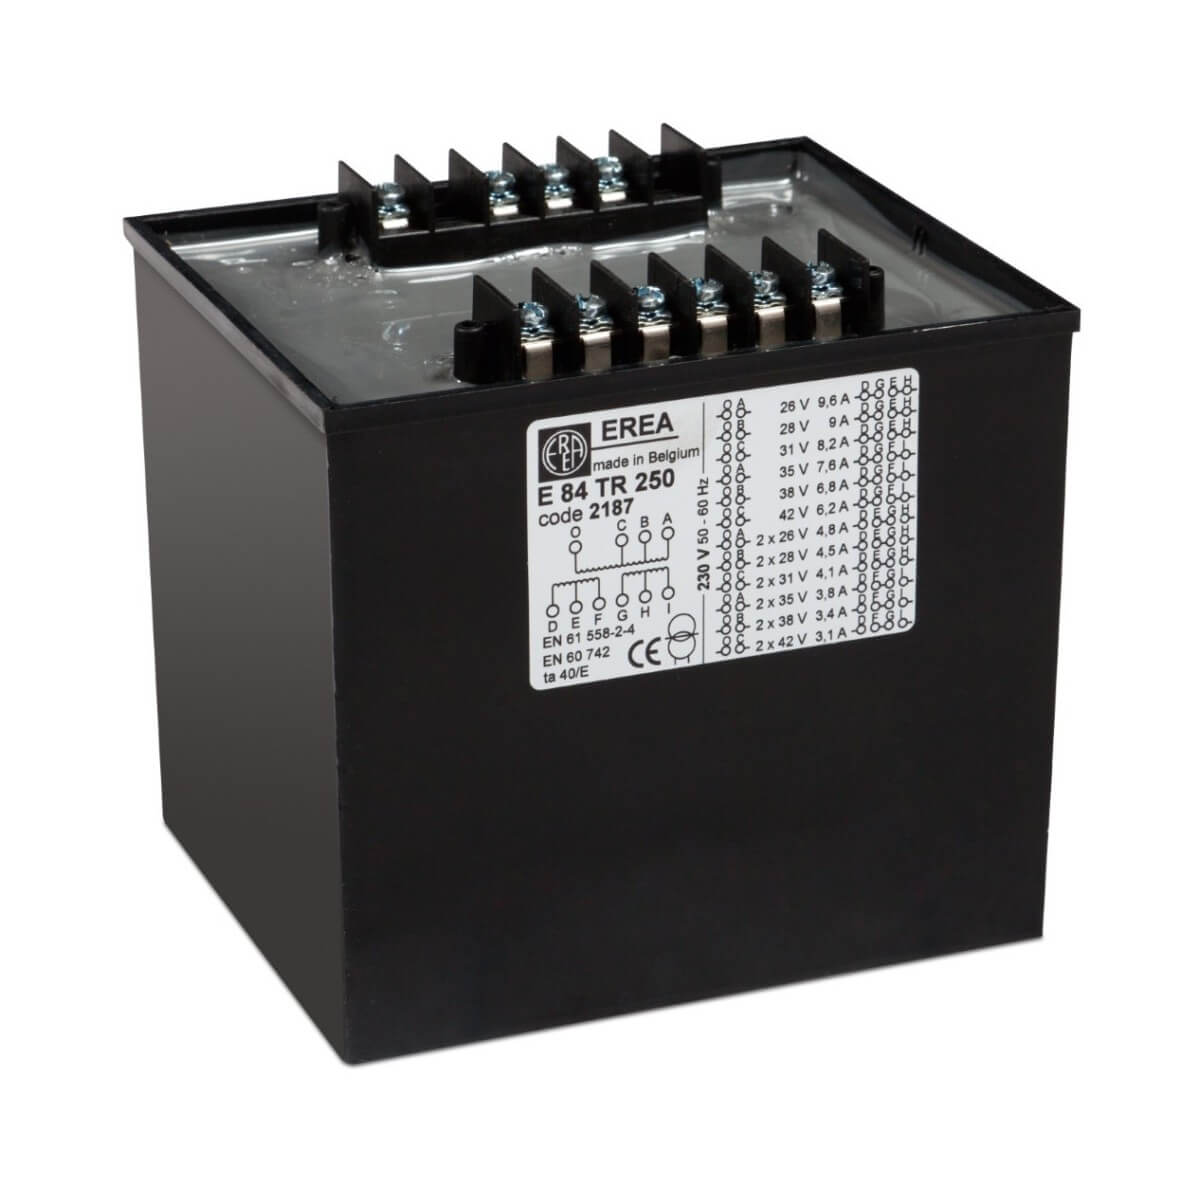 EREA 1 phase isolating transformer for electronic applications 230V/Us Multi-voltage 250VA E 84TR250